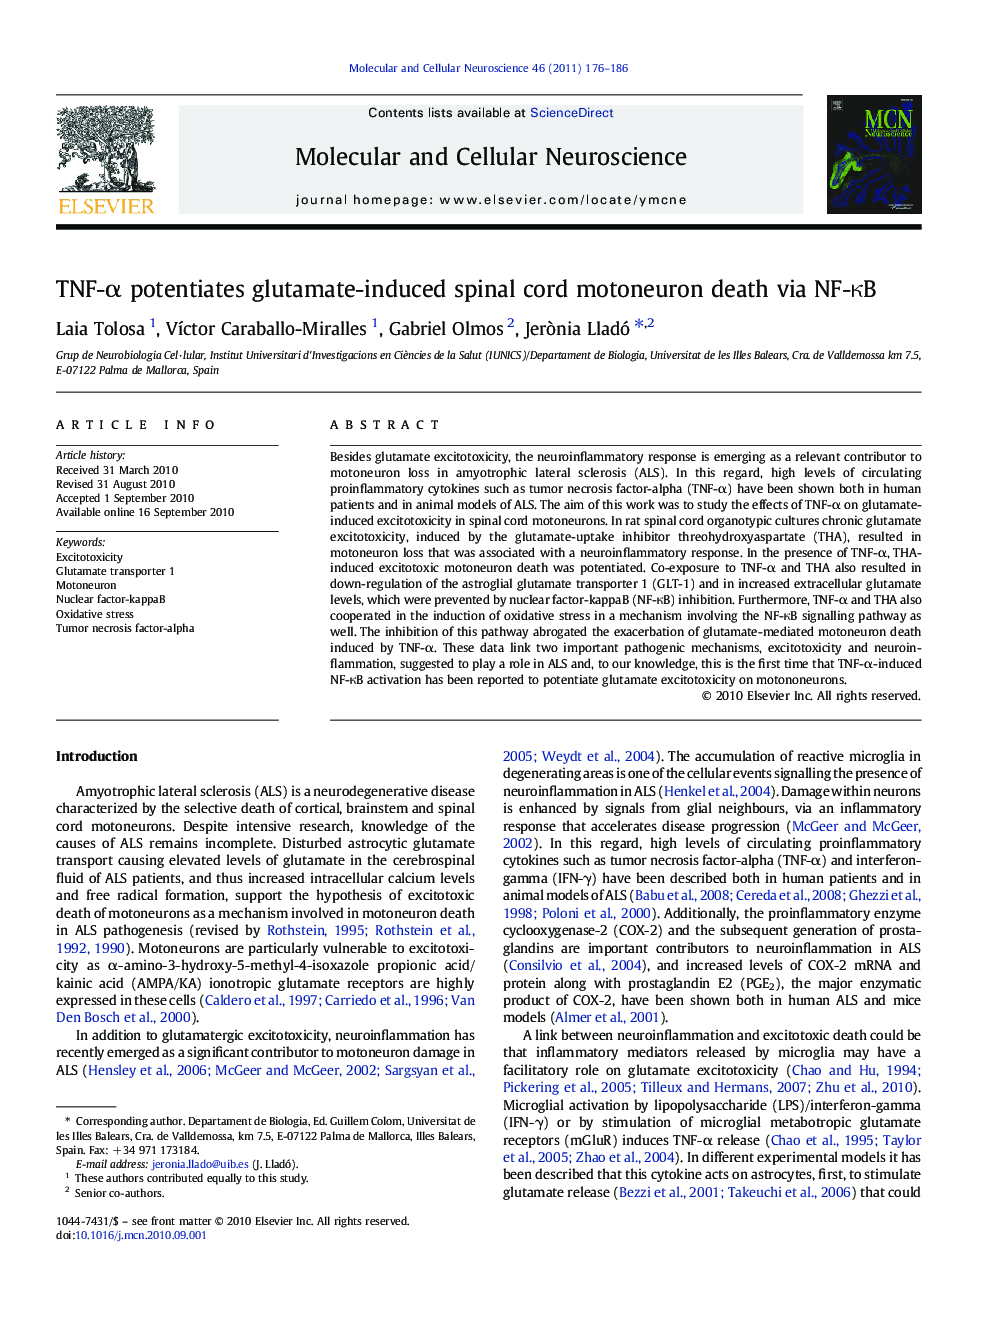 TNF-Î± potentiates glutamate-induced spinal cord motoneuron death via NF-ÎºB